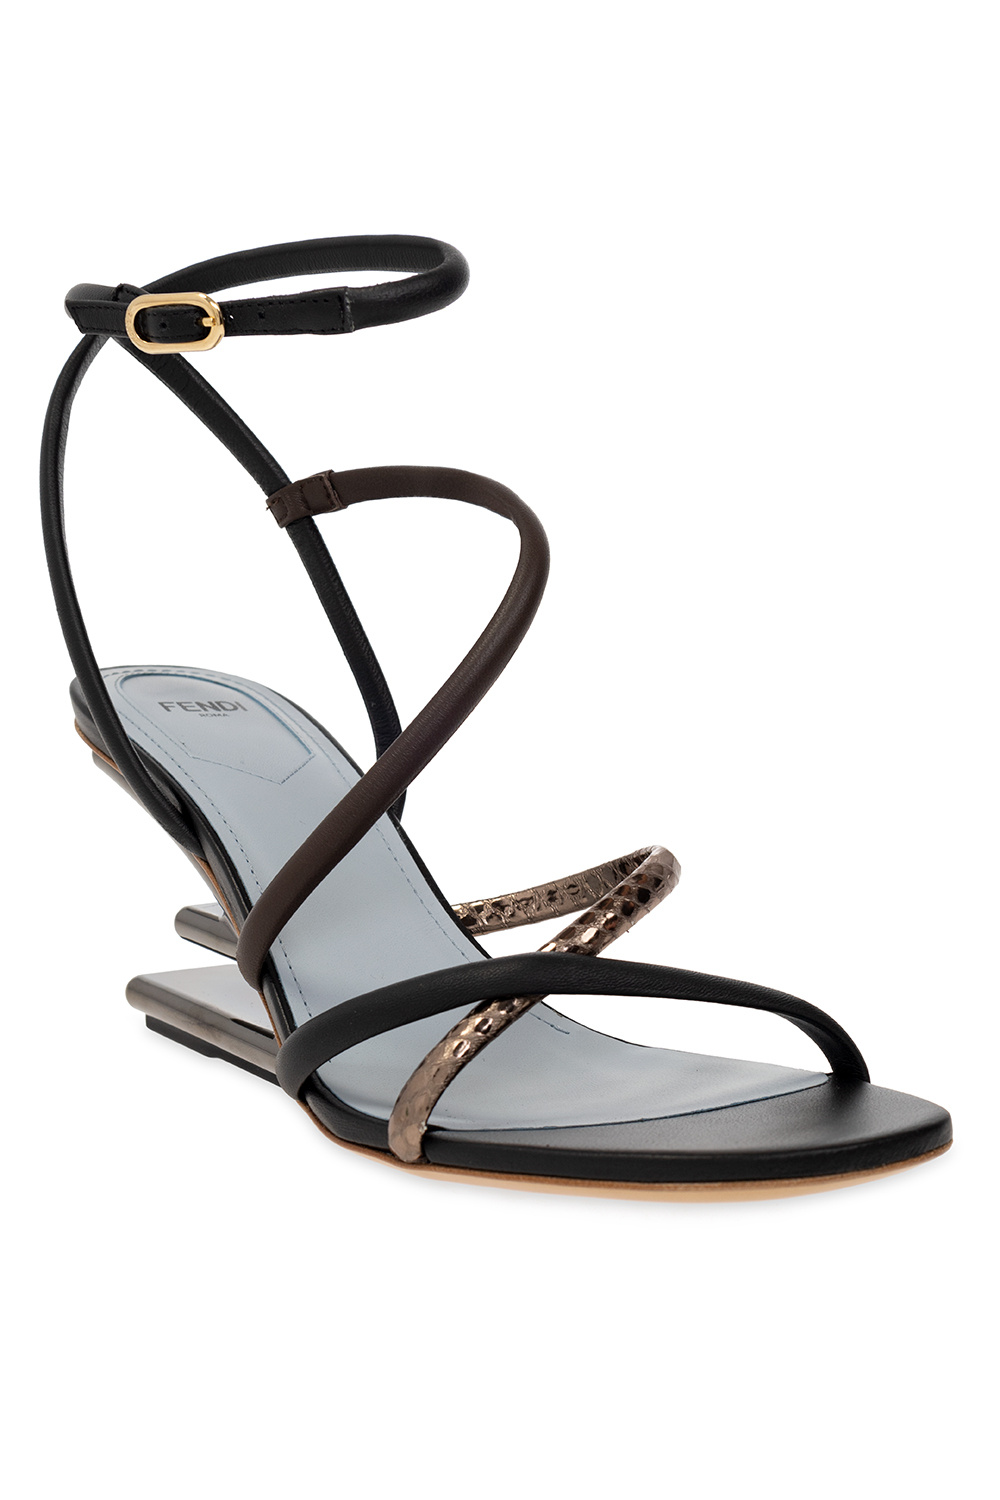 Fendi ‘Fendi First’ heeled sandals